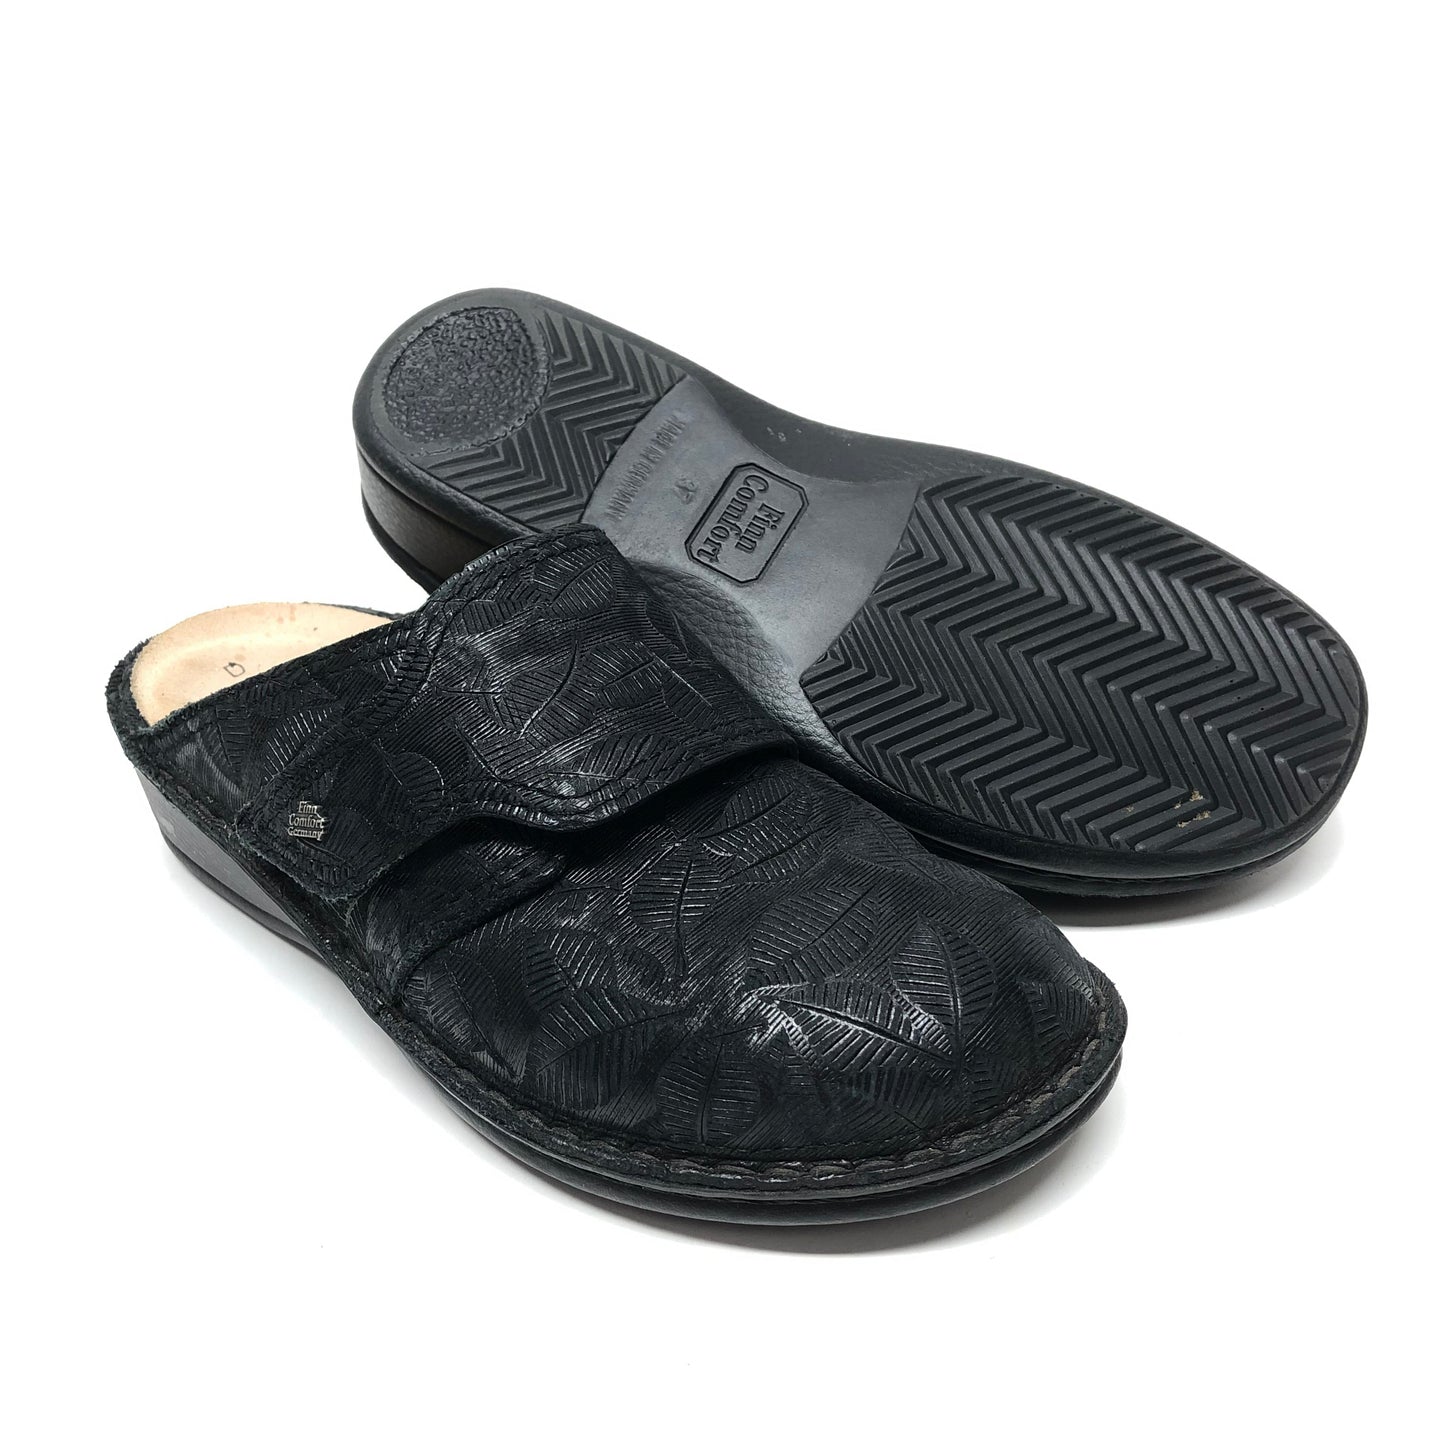 Black Sandals Heels Wedge Finn Comfort, Size 7